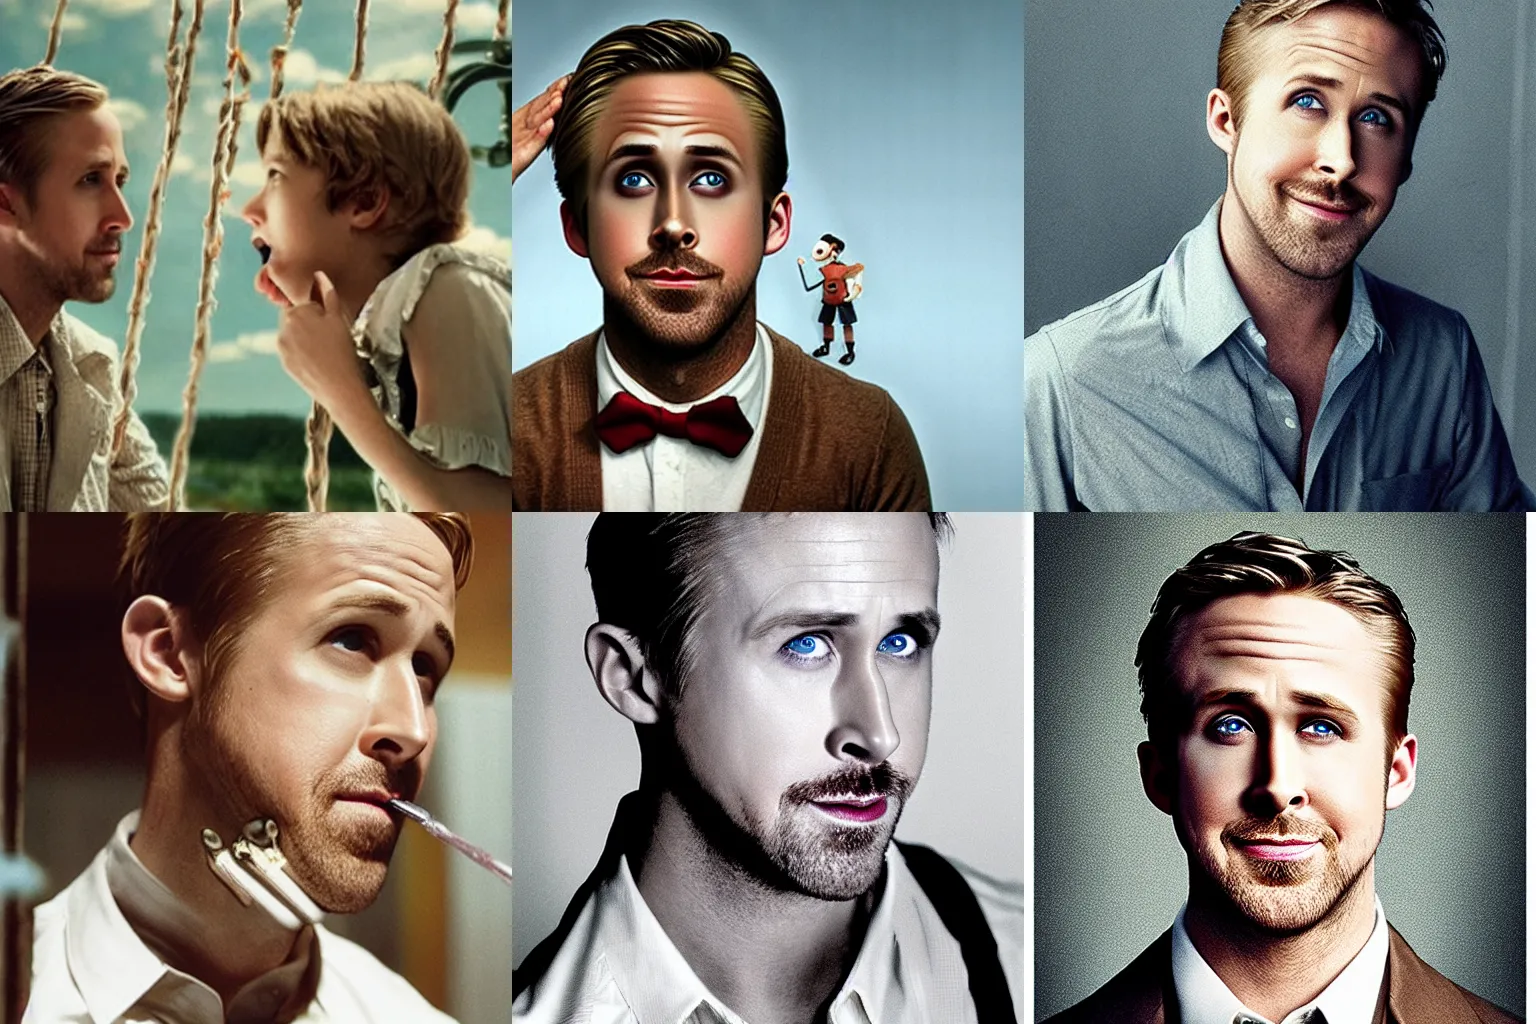 Prompt: Ryan Gosling as Pinocchio